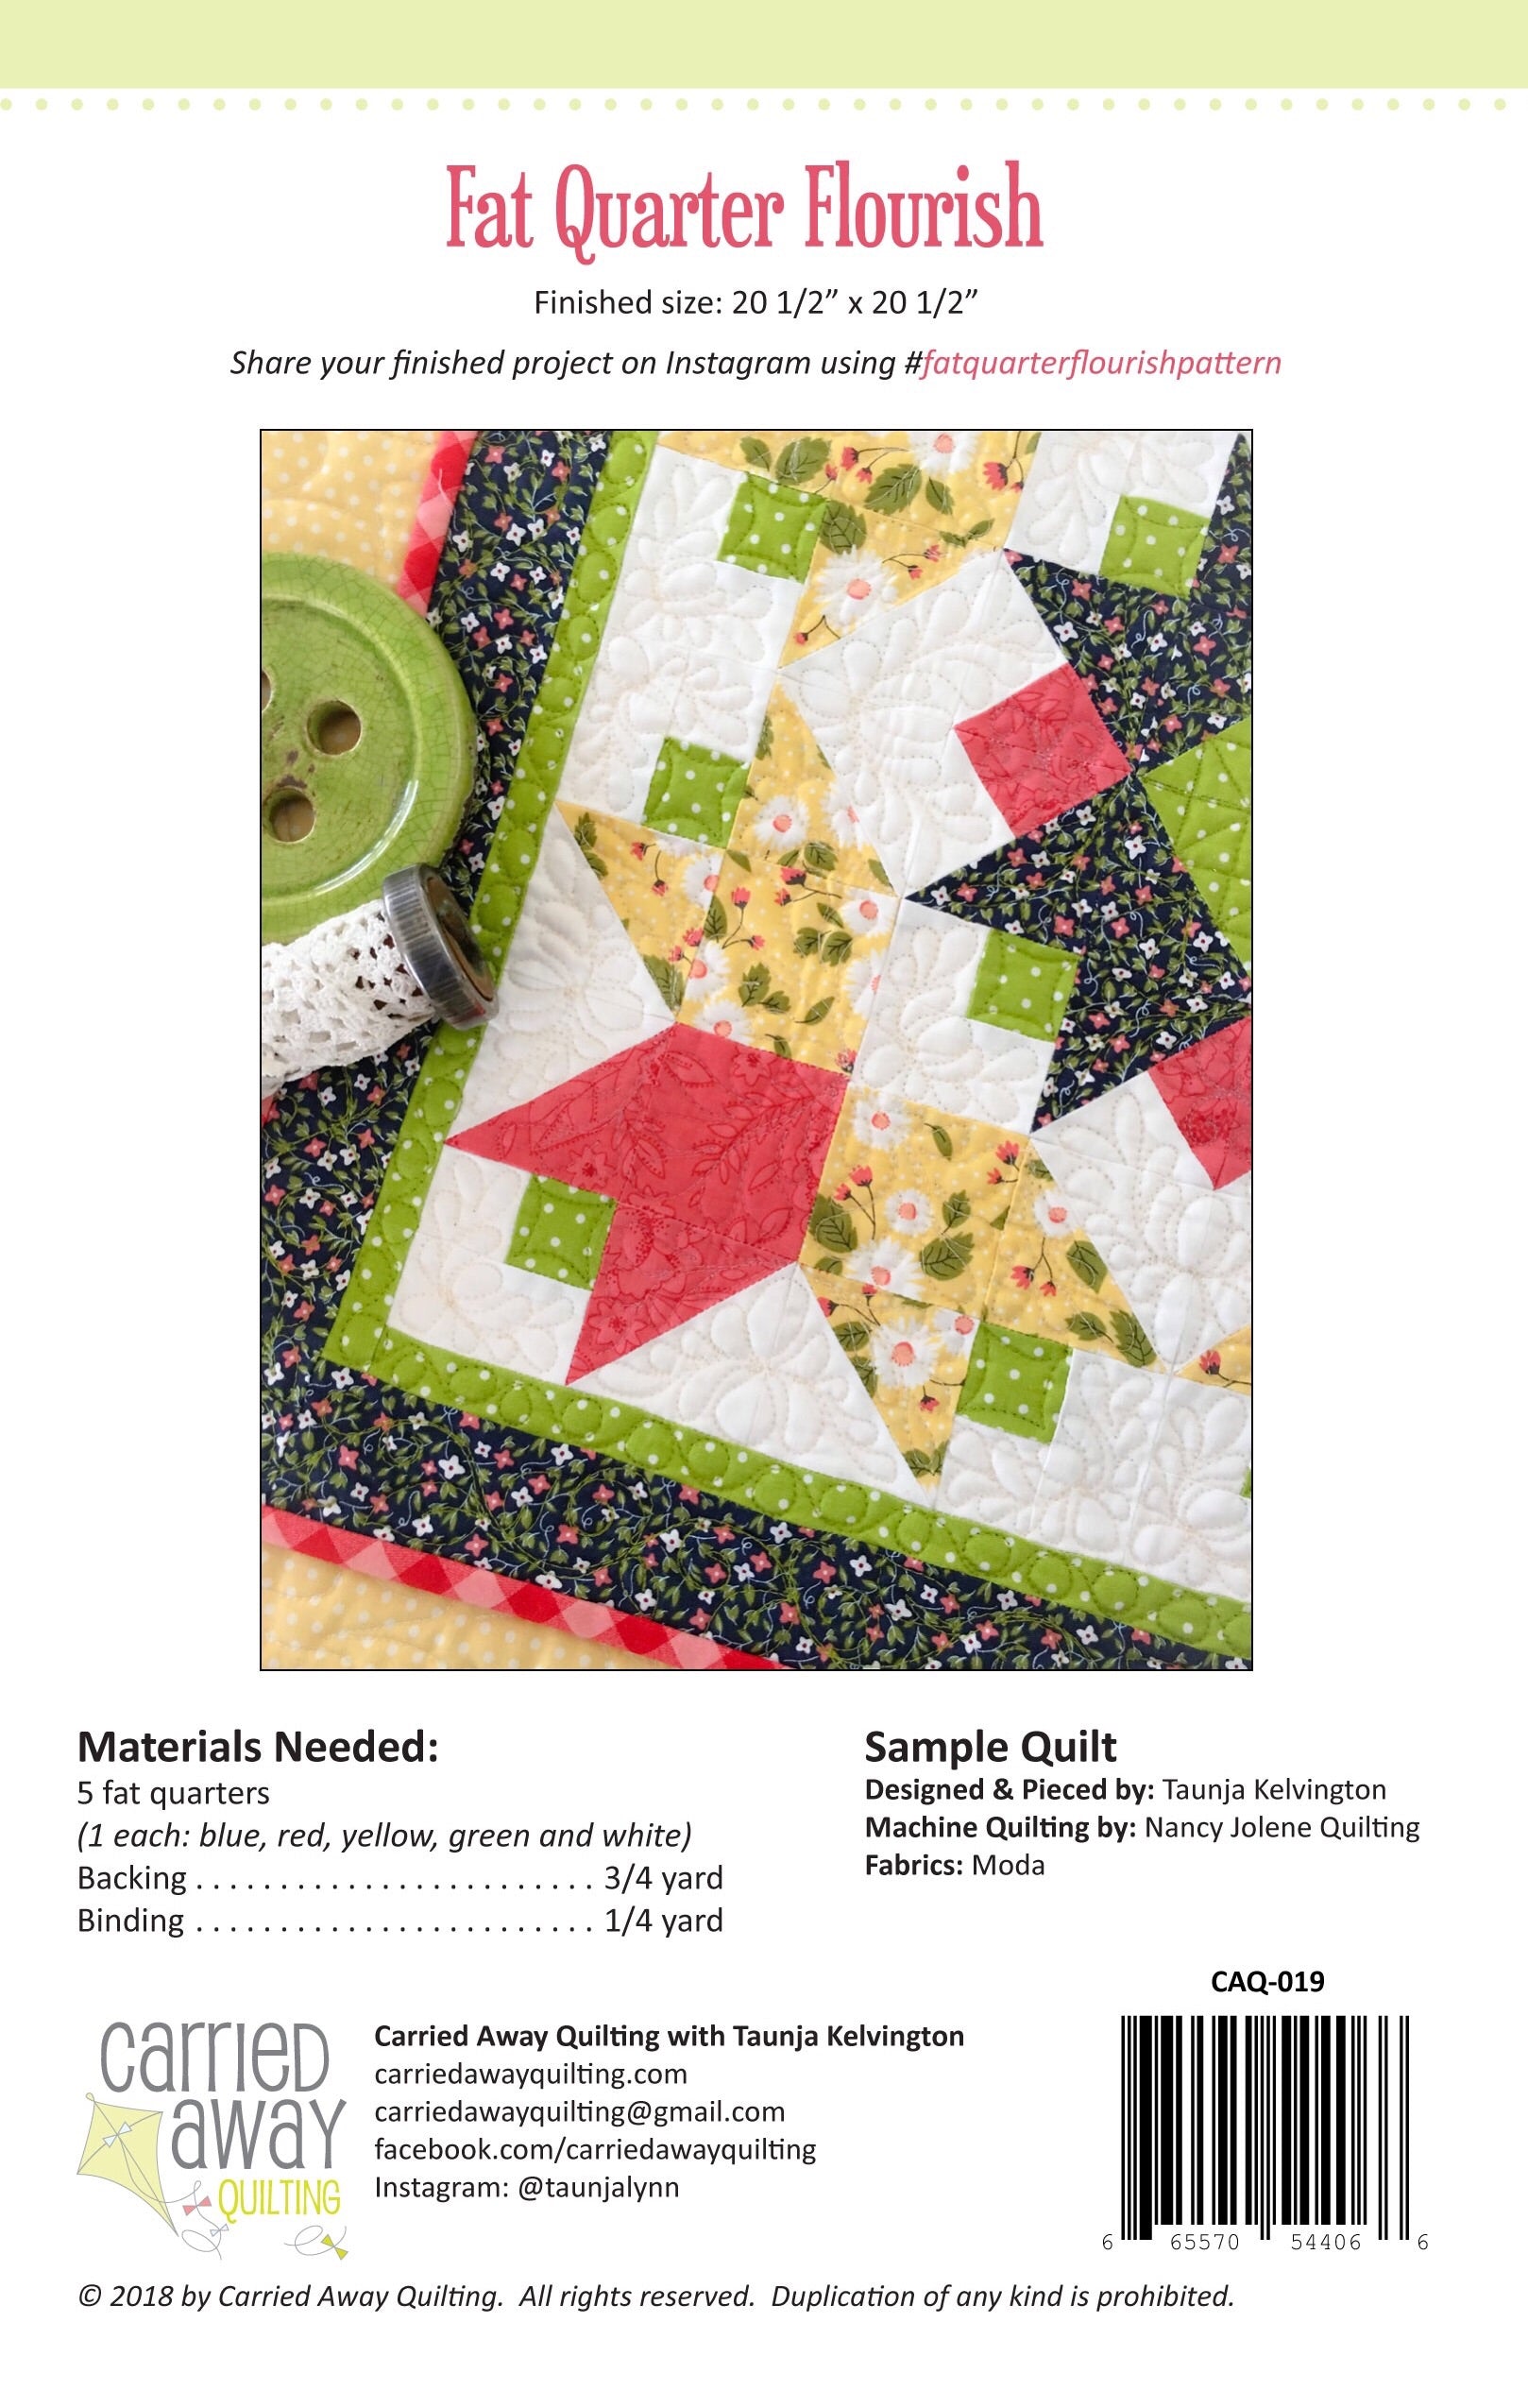 Fat Quarter Flourish Mini Quilt Pattern by Taunja Kelvington of Carried Away Quilting